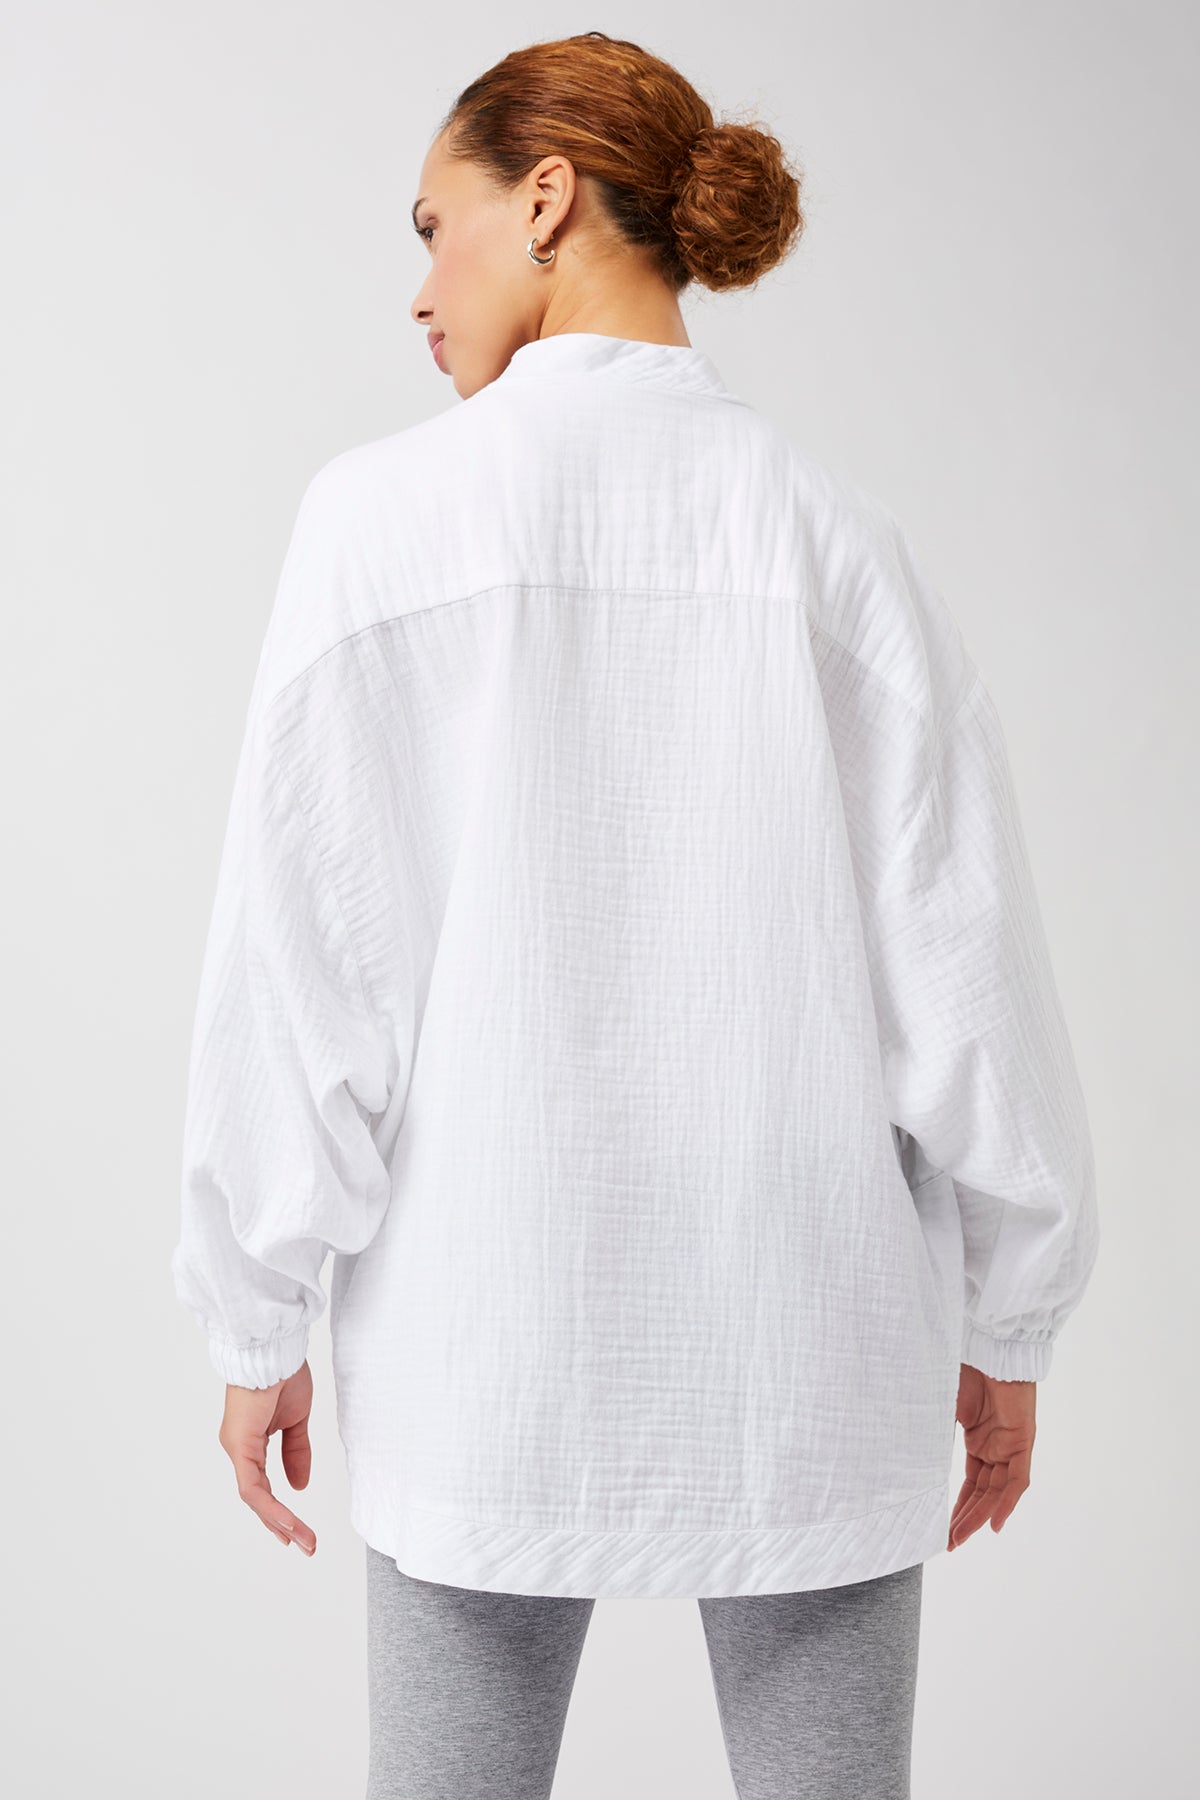 Mandala Yoga Jacke Weiß Rückseite - Kimono